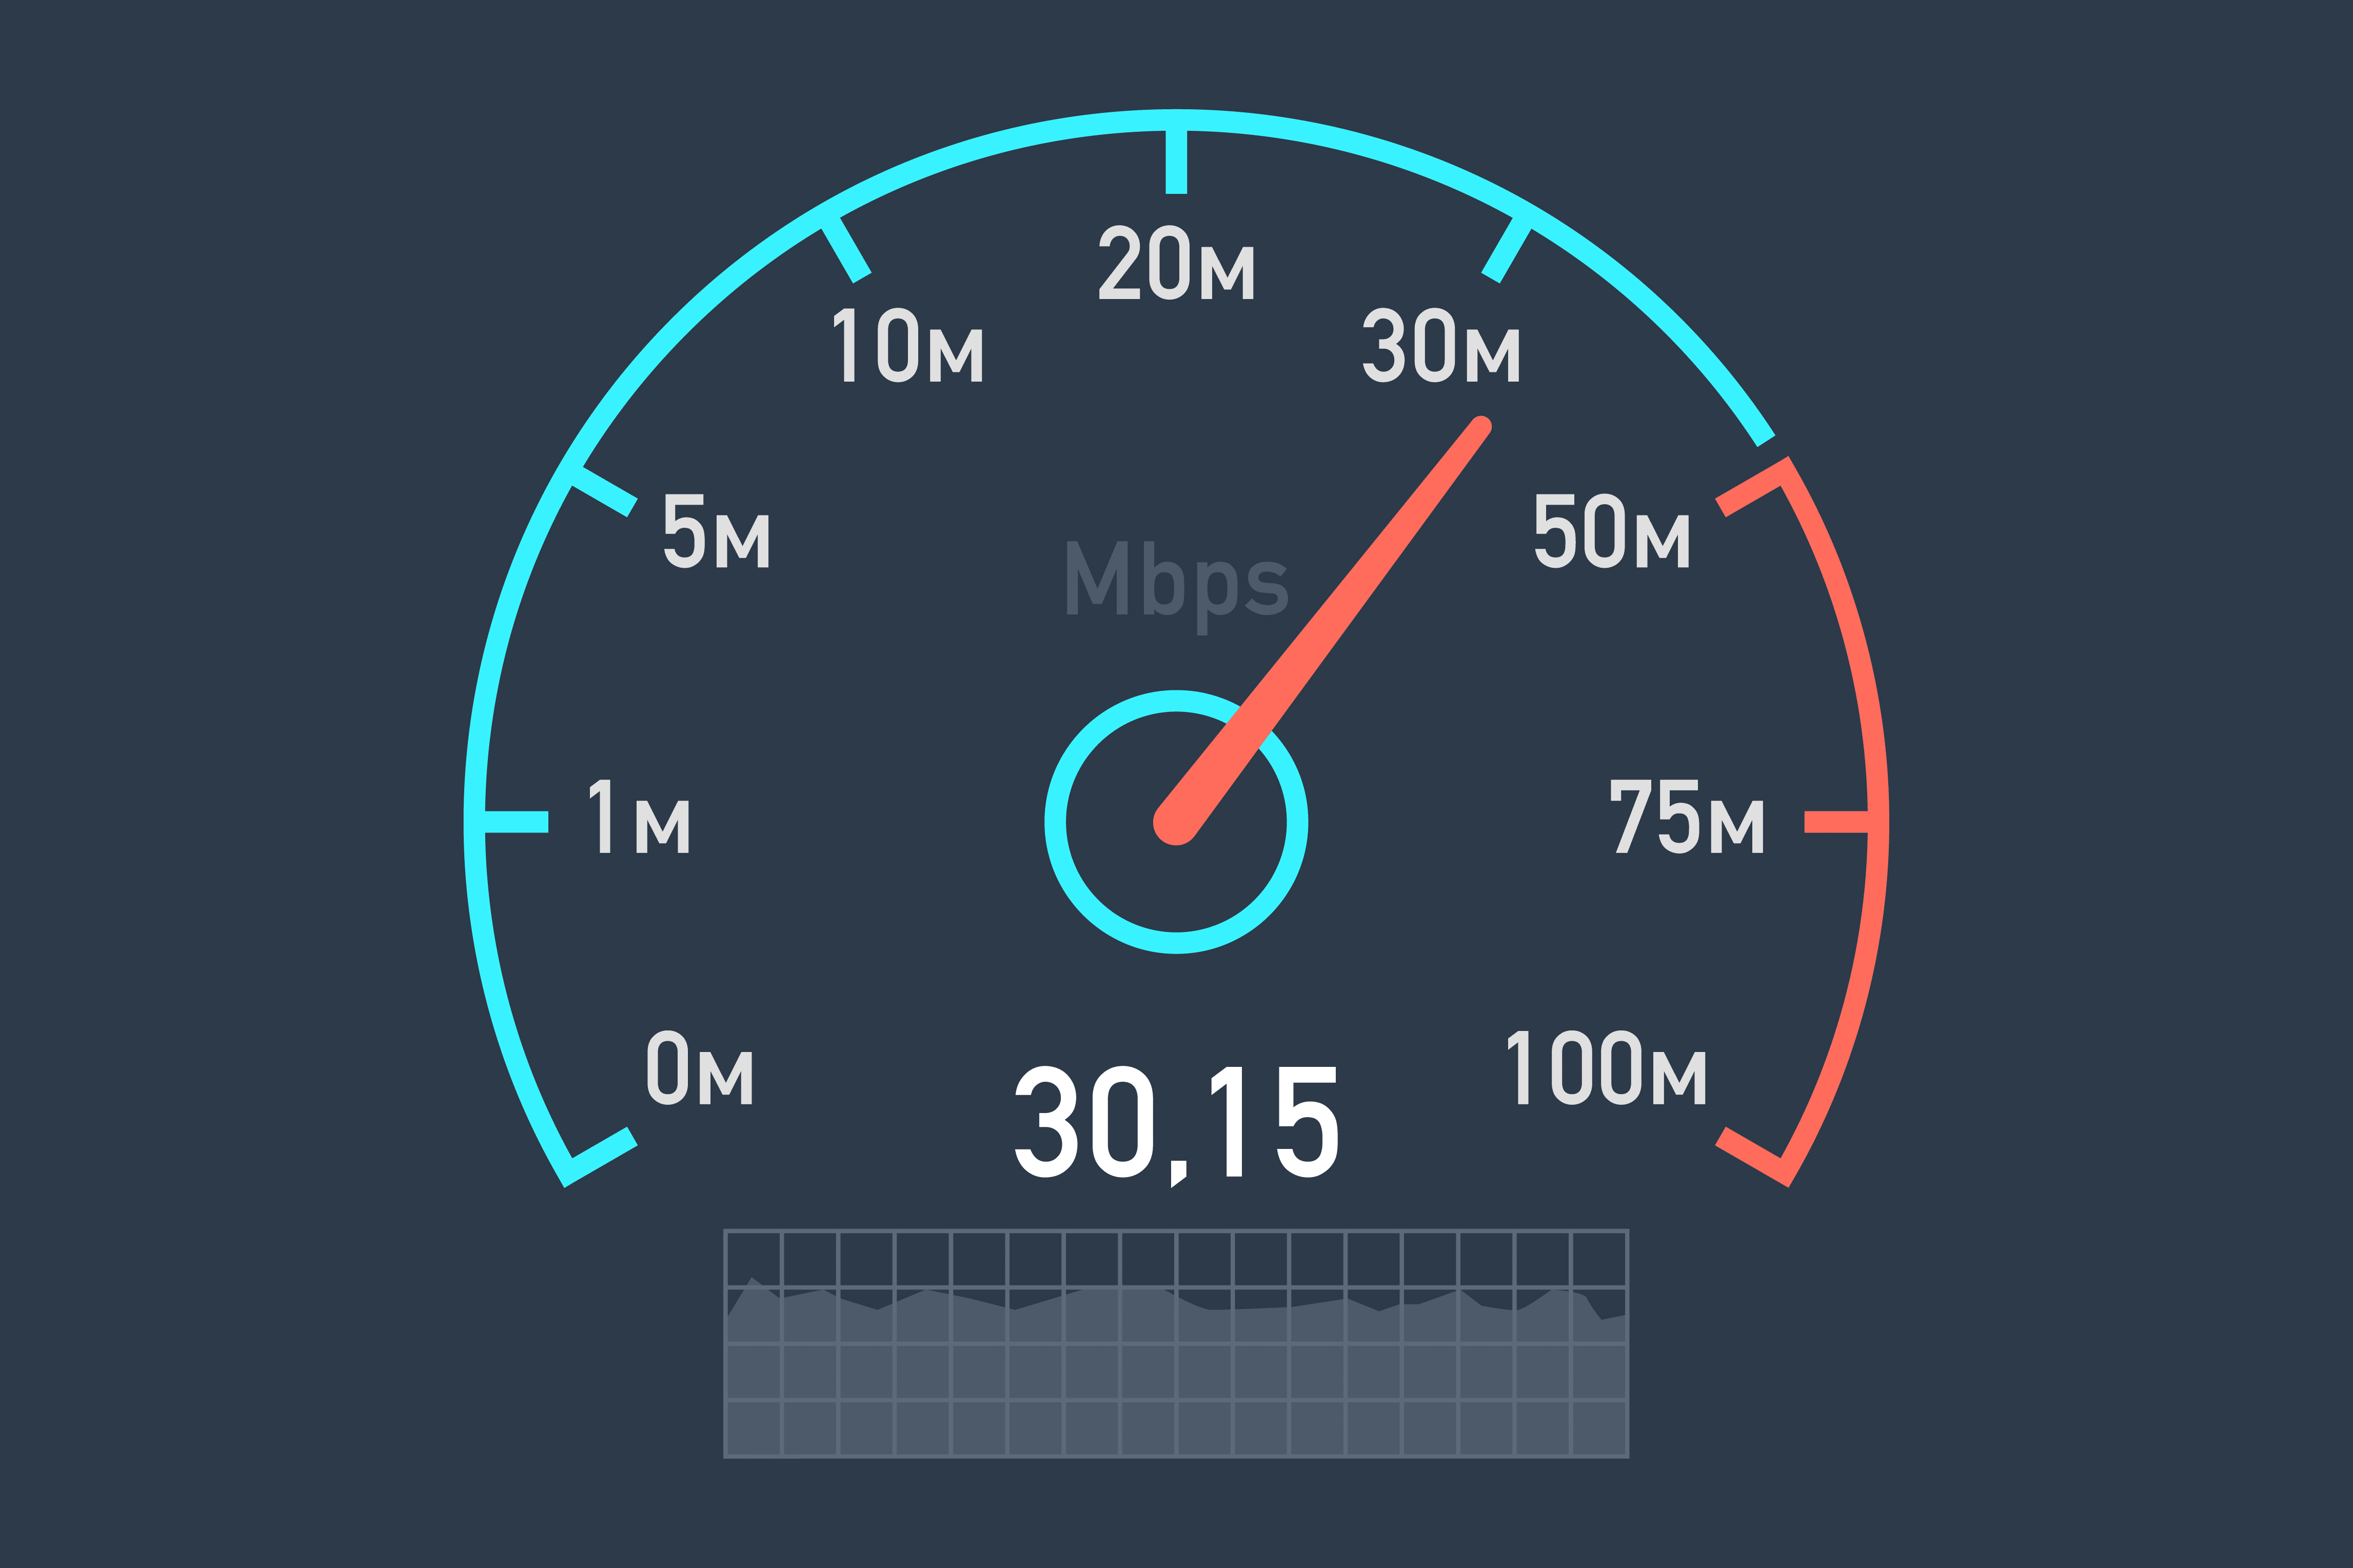 gvsu bandwidth speed test